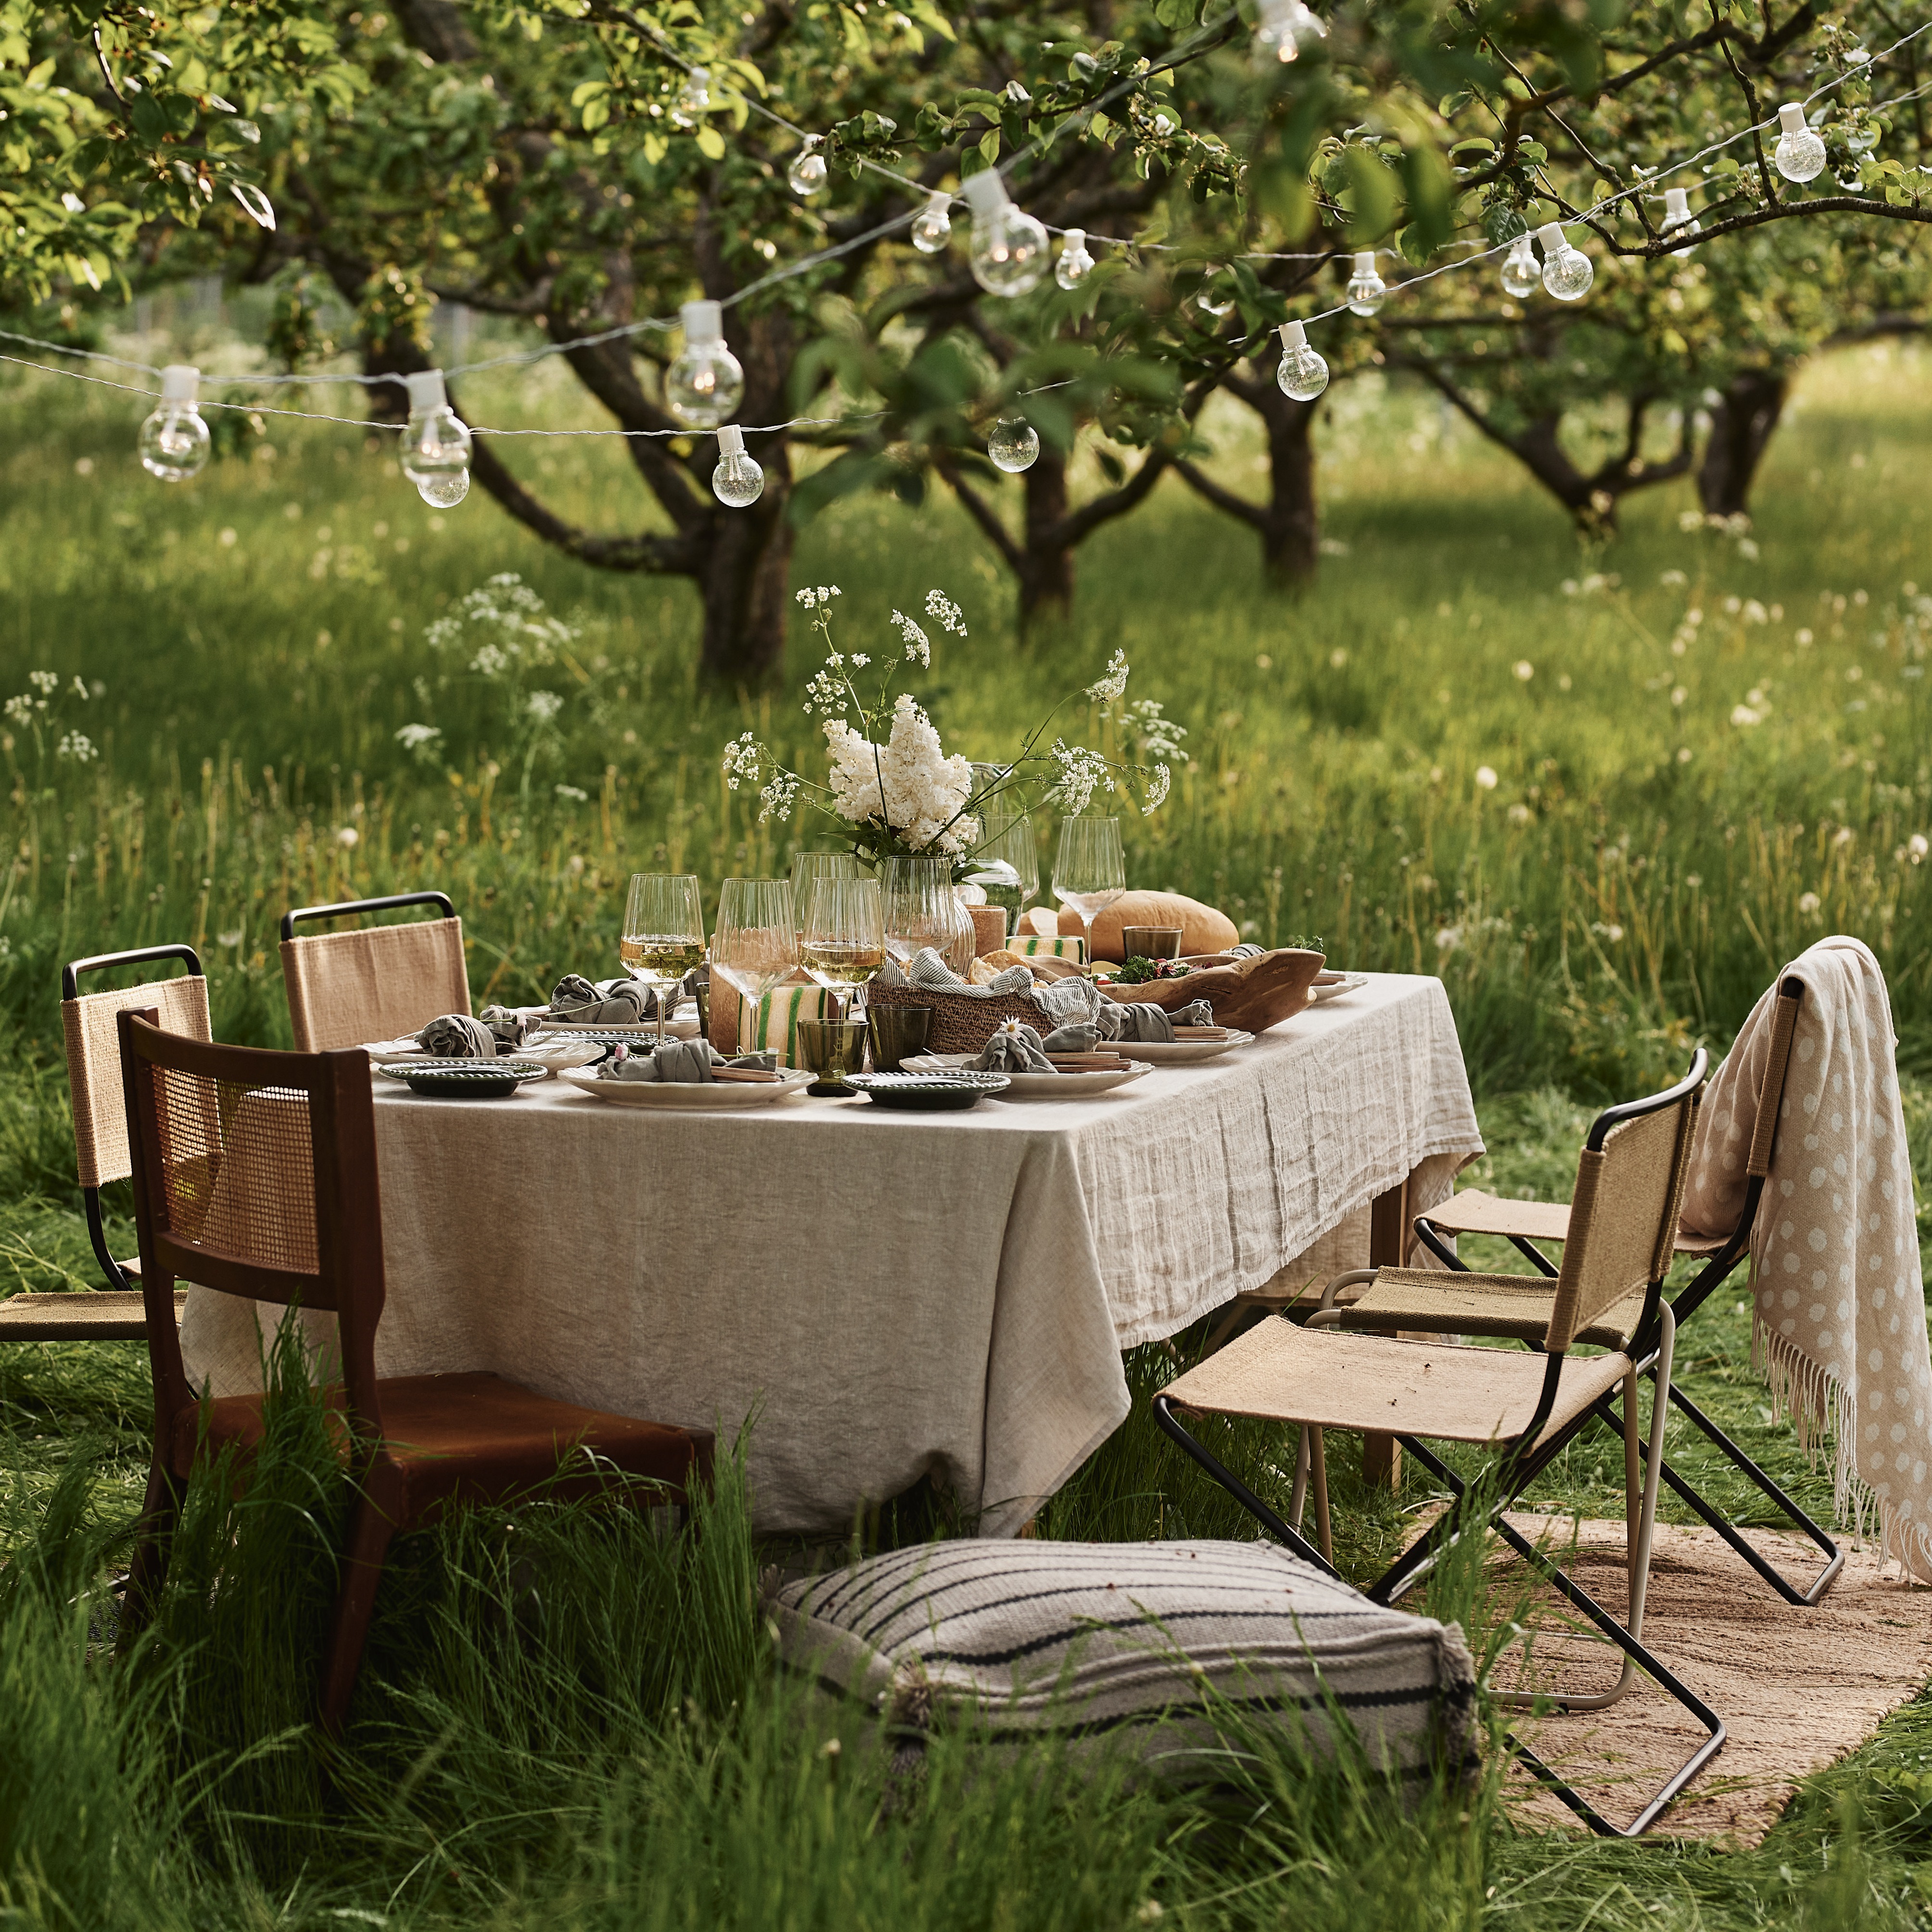 Garden party inspiration – An elegant summer table setting